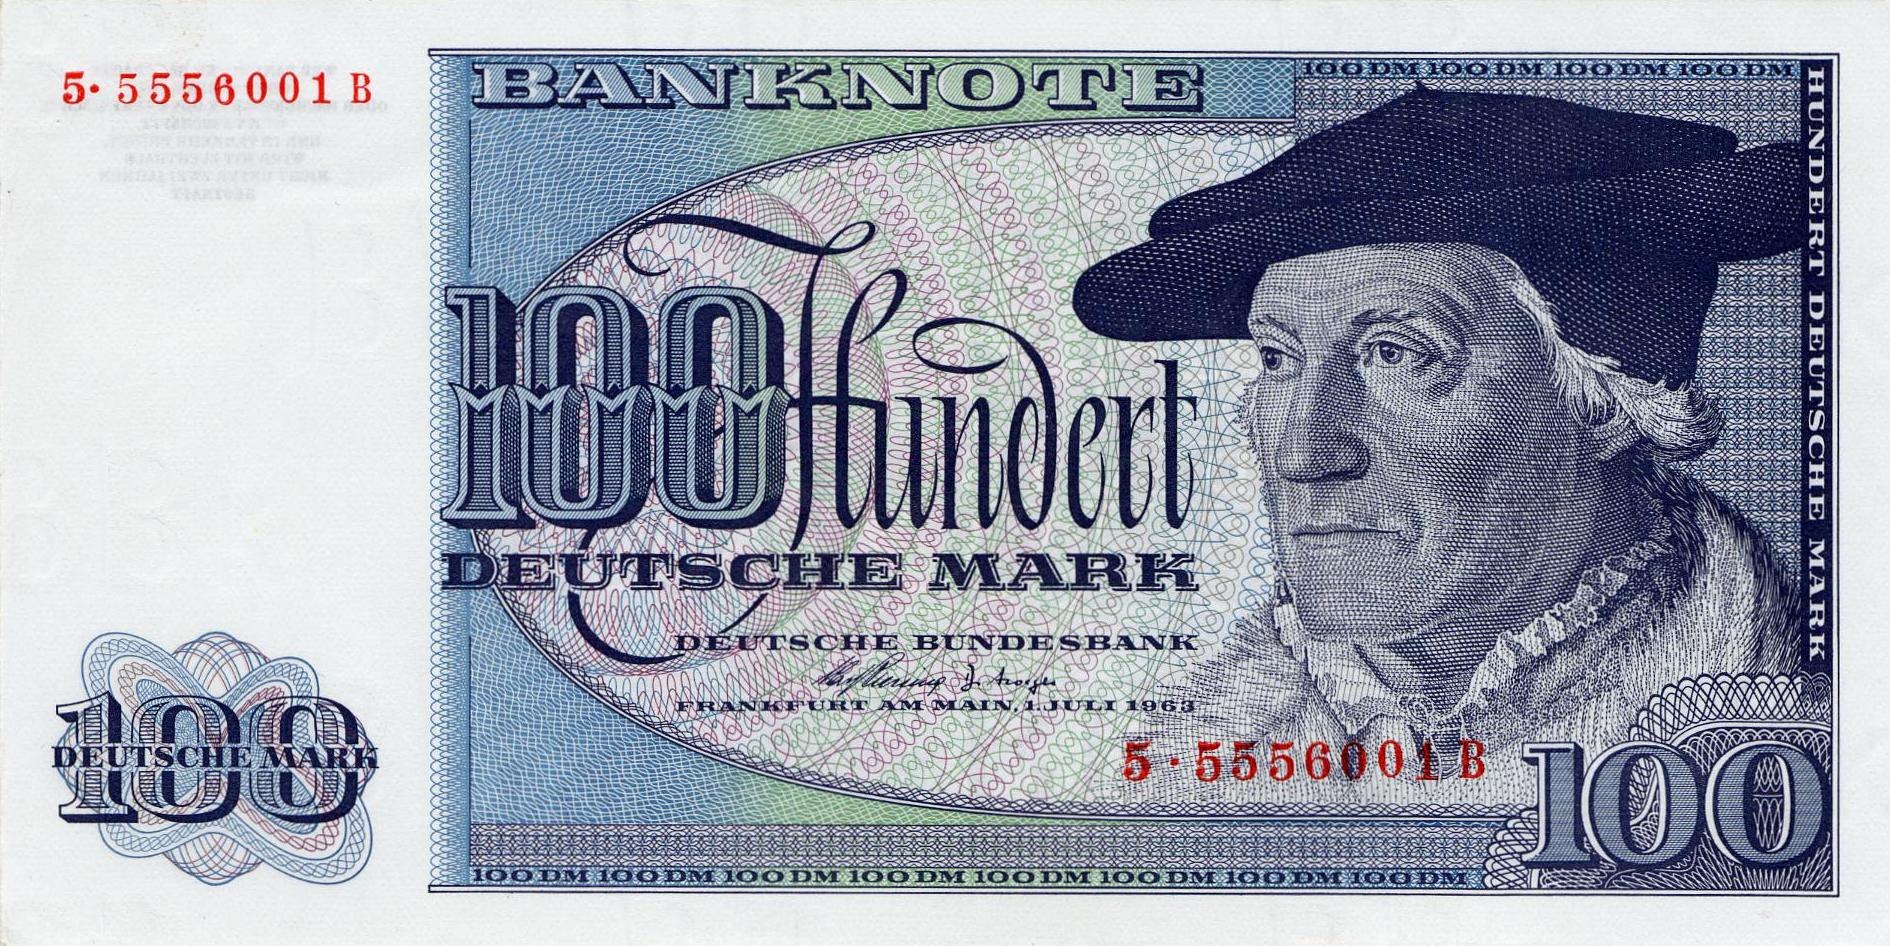 Deutsche mark. Валюта Германии марка. Купюра 100 Дойч марок. Марки ФРГ банкноты. 100 Марок Германия банкнота.